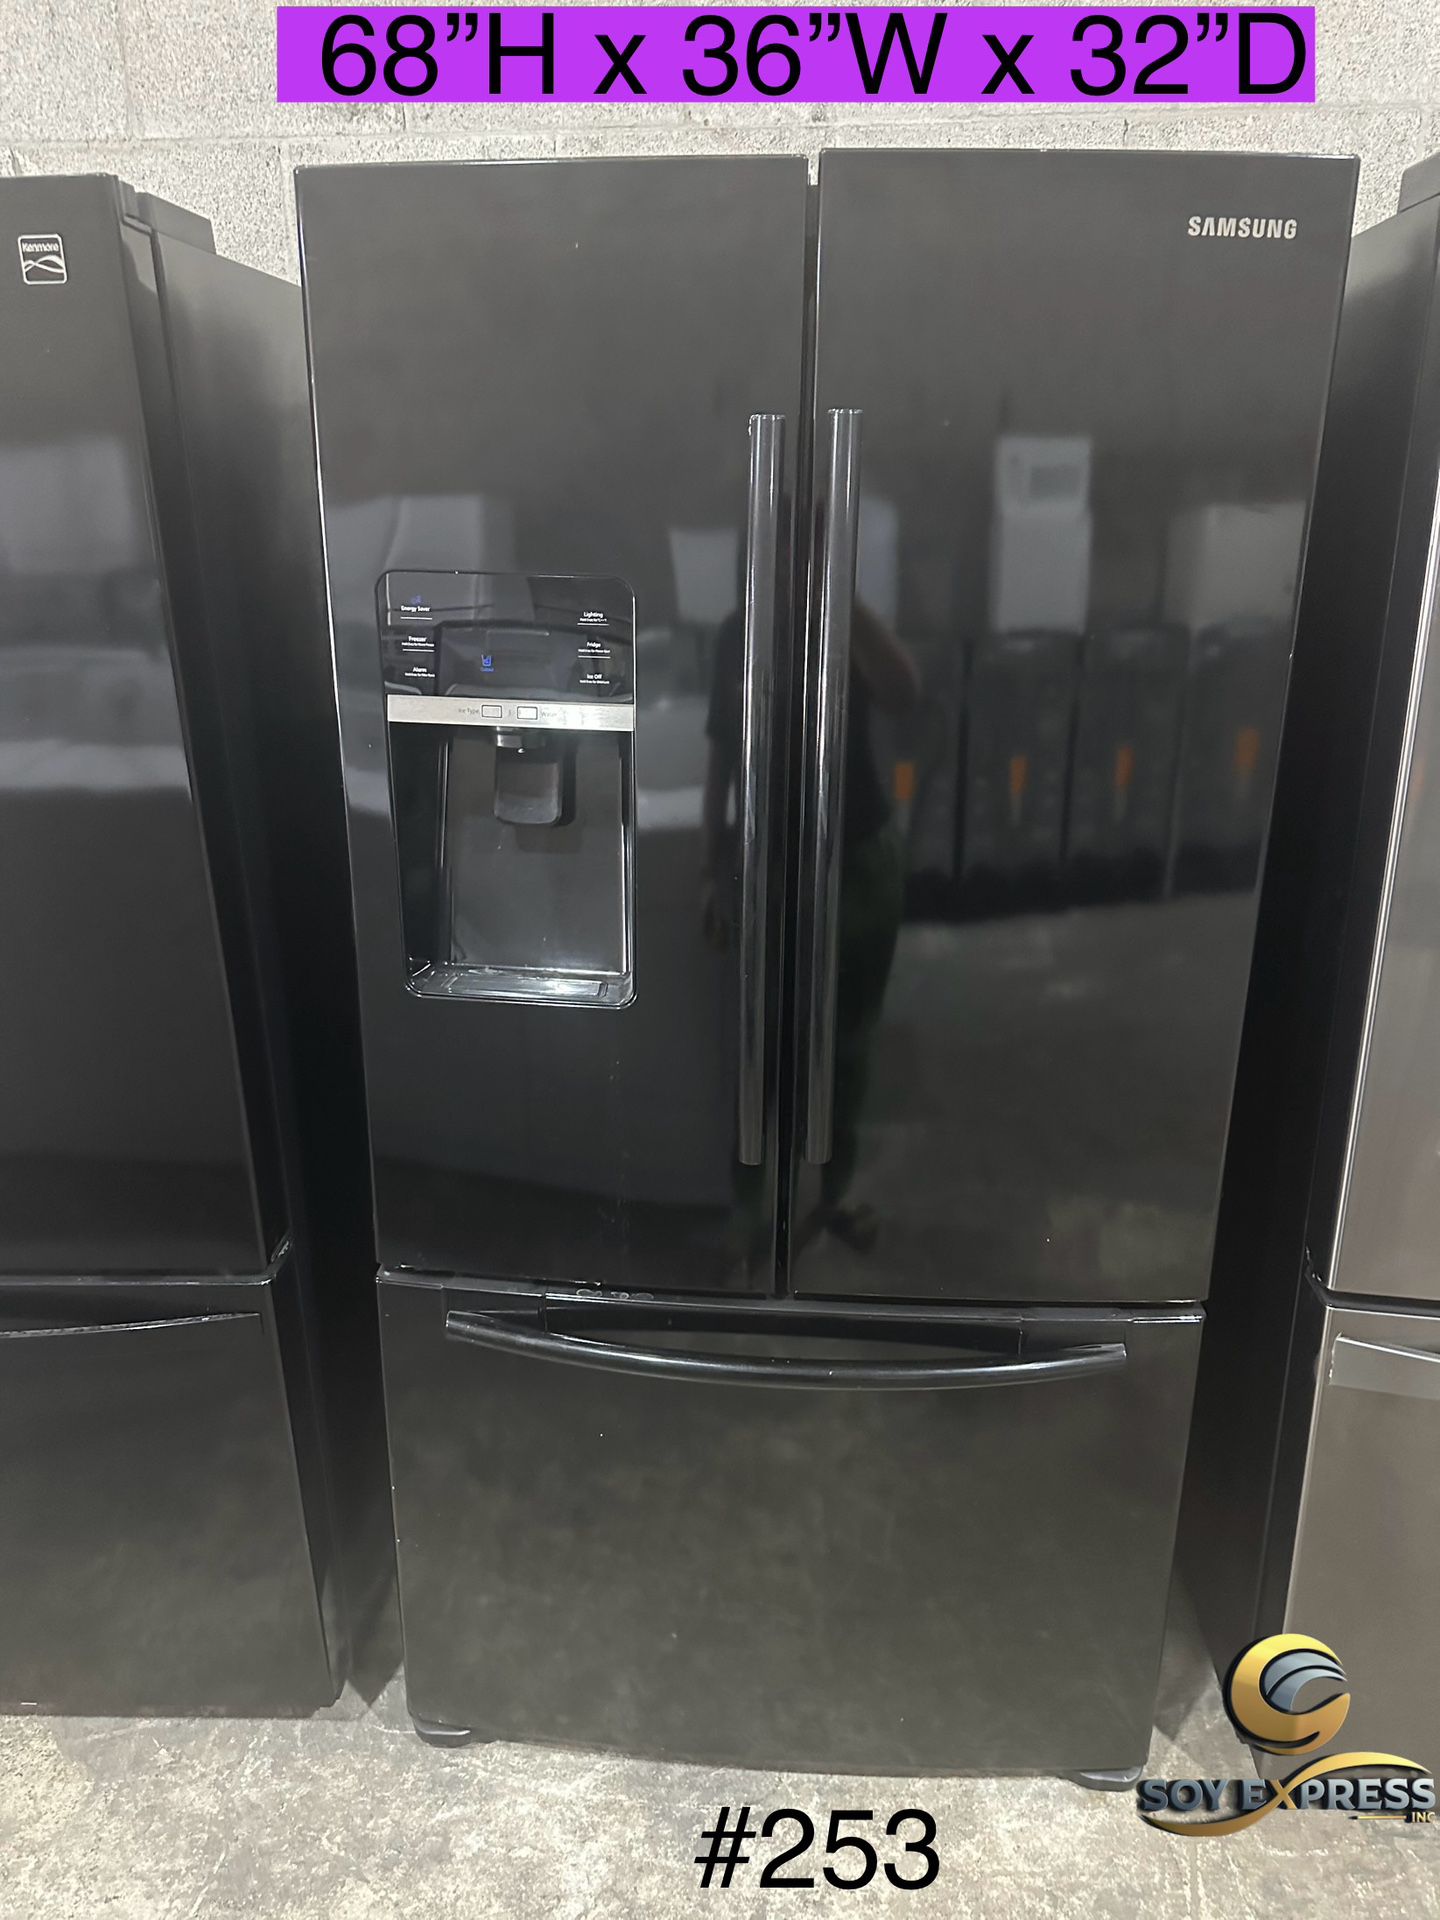 Samsung Refrigerator French Door (ICE MAKER DONT WORK) (#253)